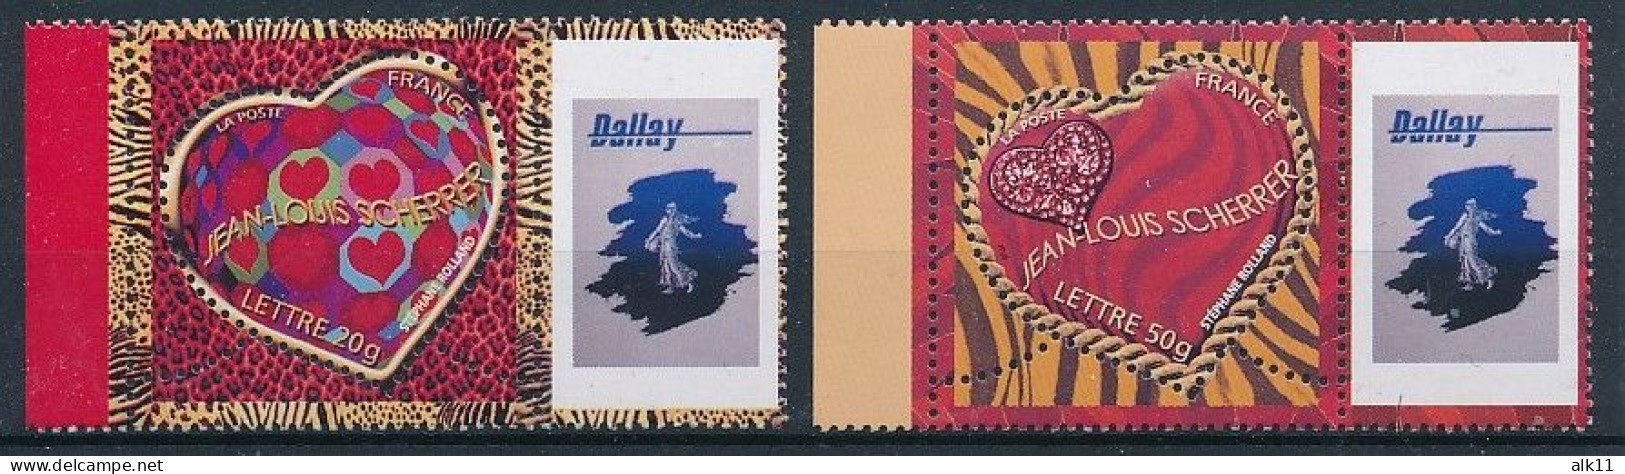 France 2006 - 3861Aa, 3862Aa Deus Timbres Coeur Scherrer   Personnalisés Logo Dallay - Neuf - Unused Stamps